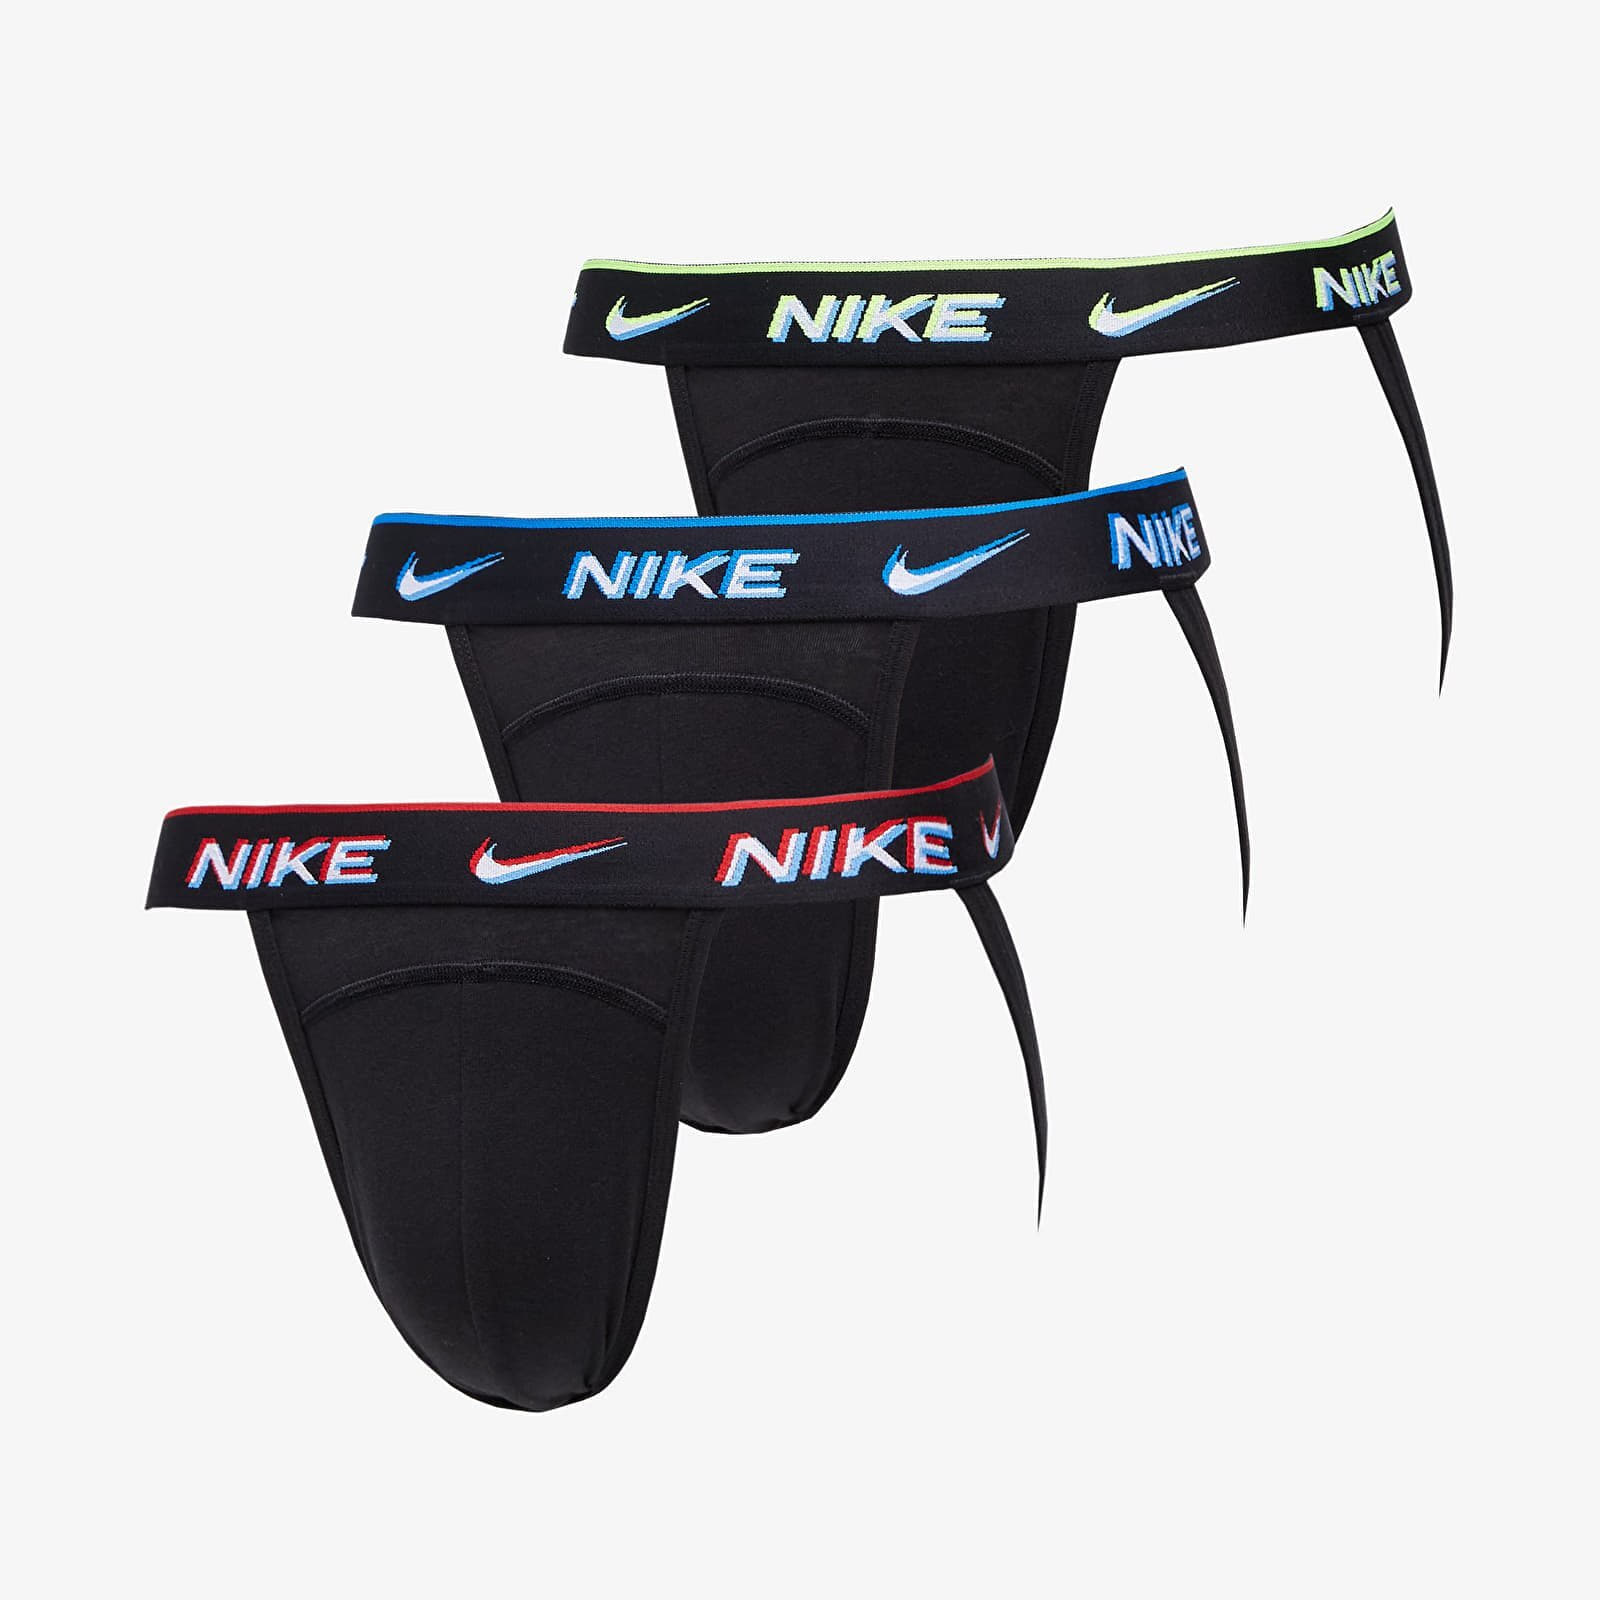 Boxershorts Nike Everyday Cotton Jock Strap 3 Pack Black/ Transparency WB